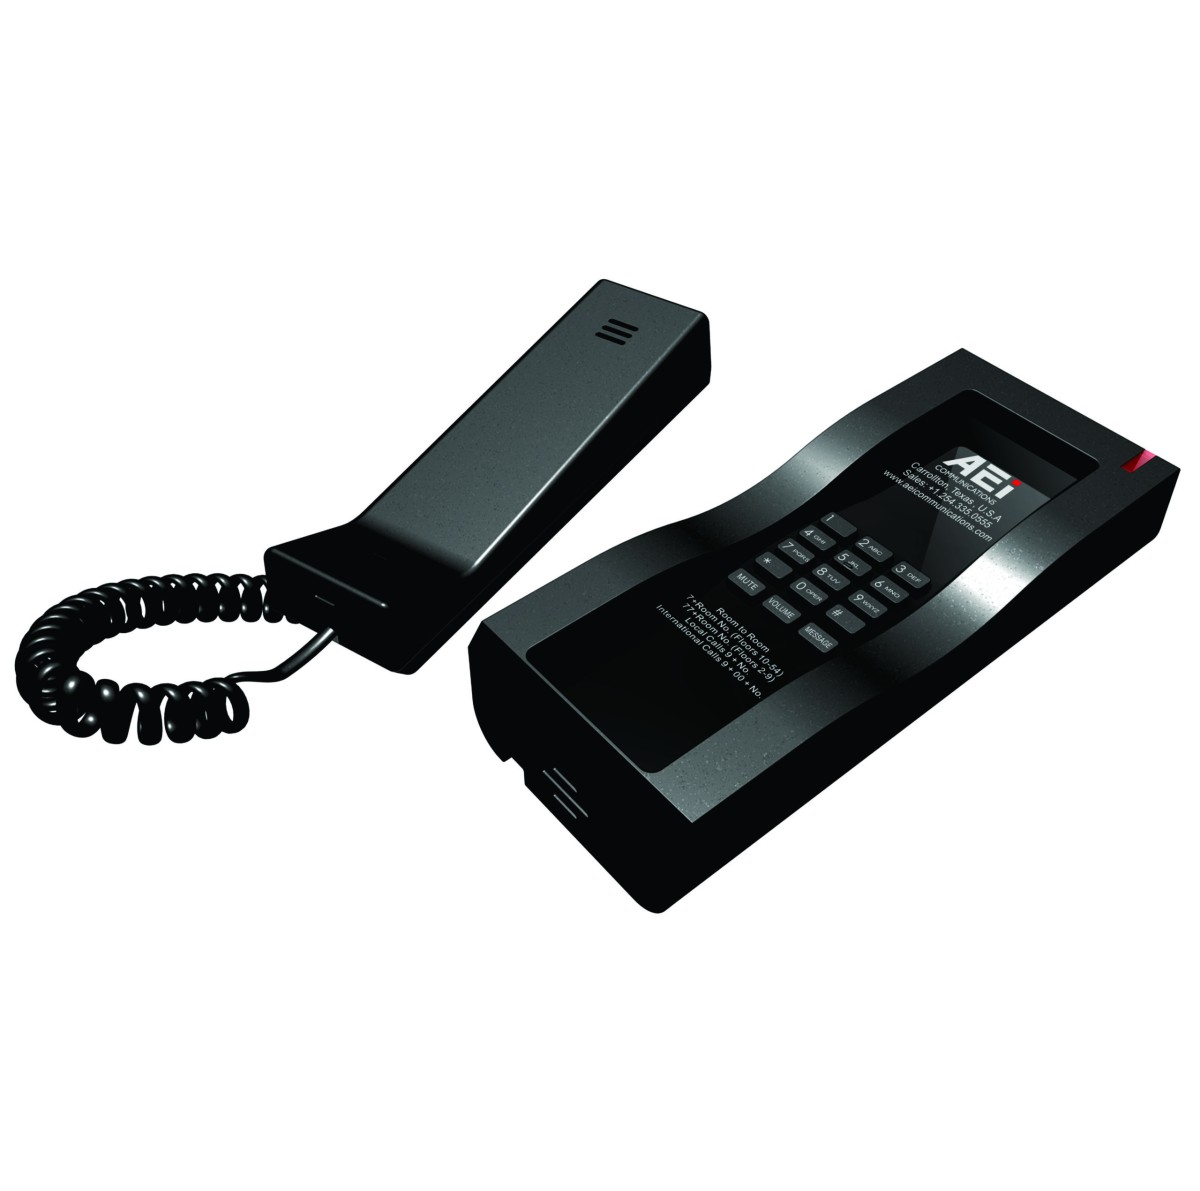 AEI AFT-4100 Compact Single-Line Analog Corded Telephone